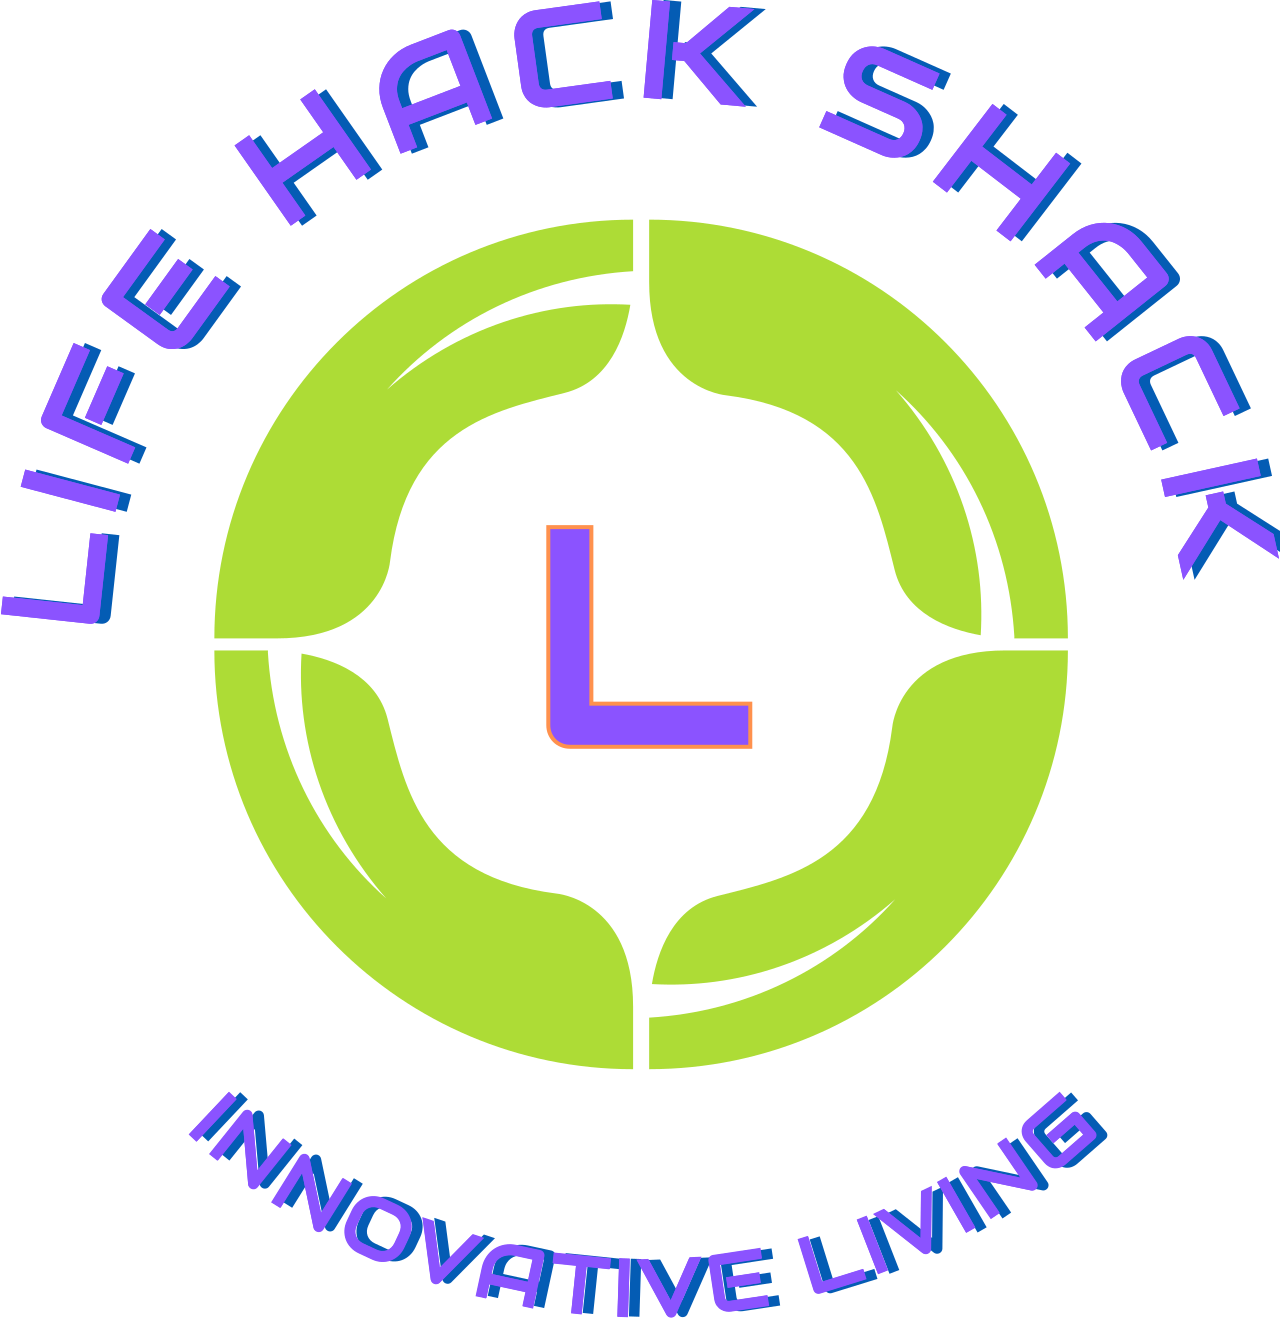 LIFE HACK SHACK 's logo